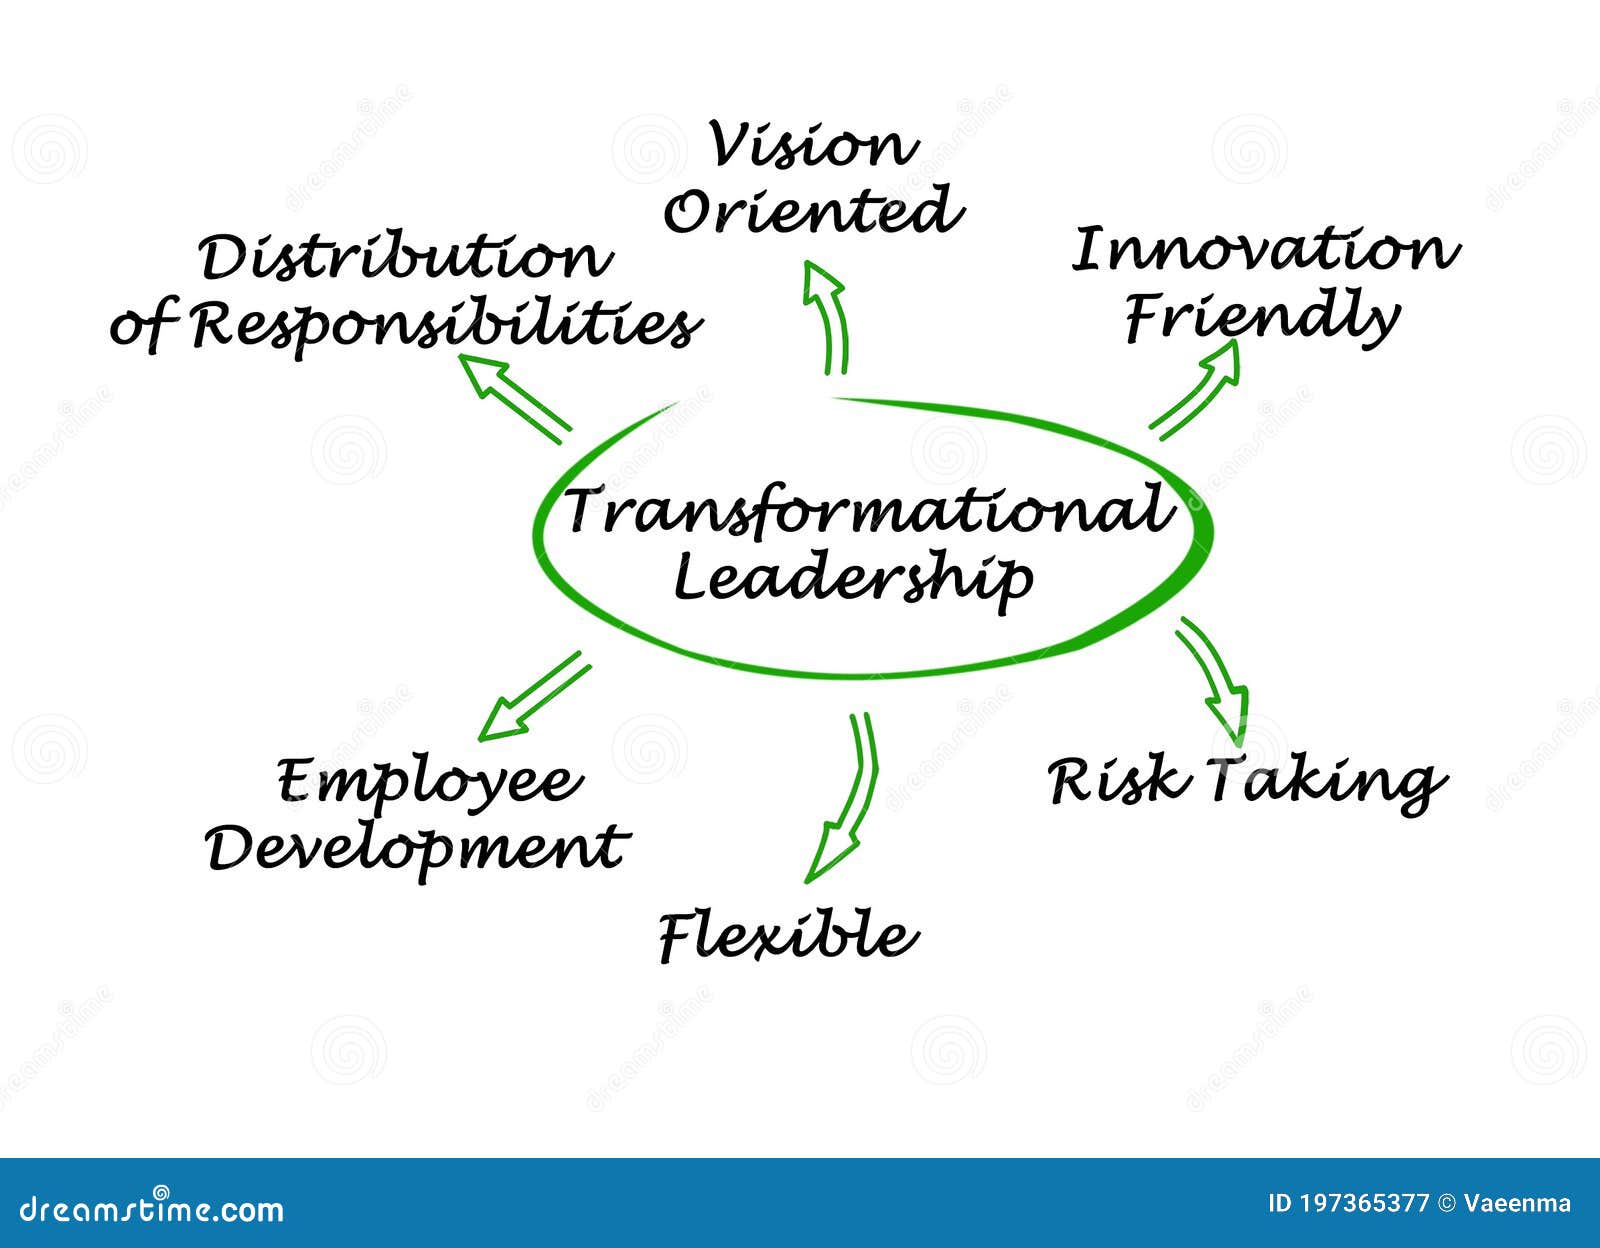 characteristics of transformational leadership